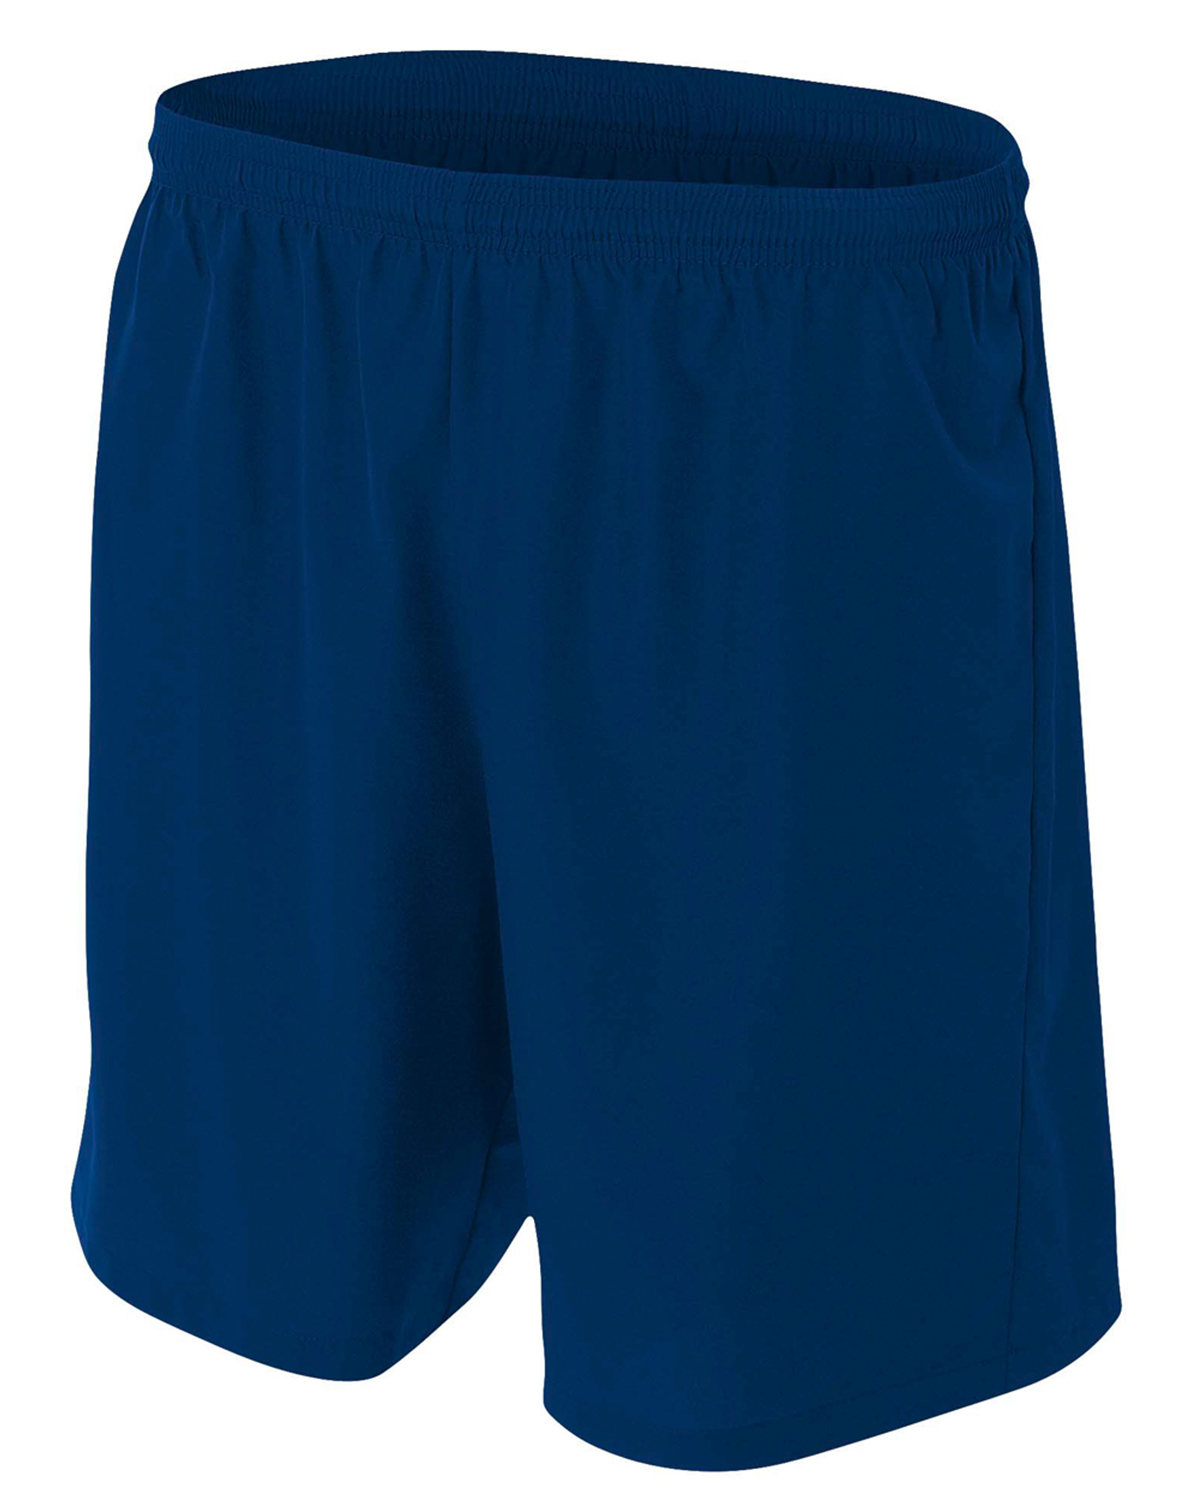 A4 Drop Ship N5343 - Men's Woven Soccer Shorts